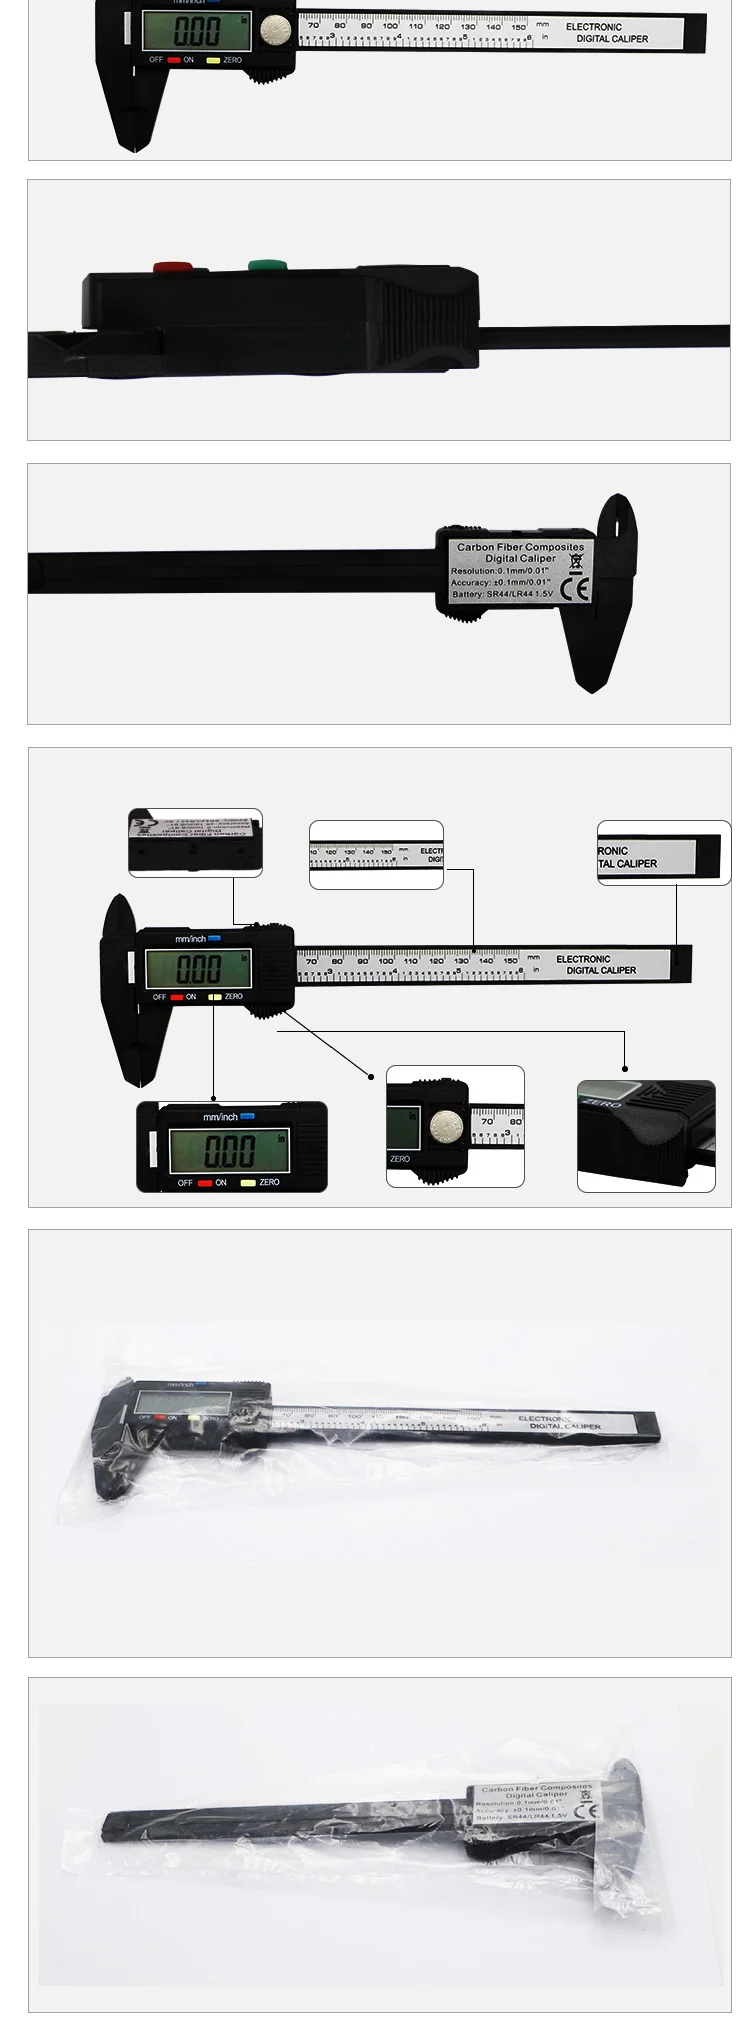 Shahe Digital Vernier Calipers 150 mm 6